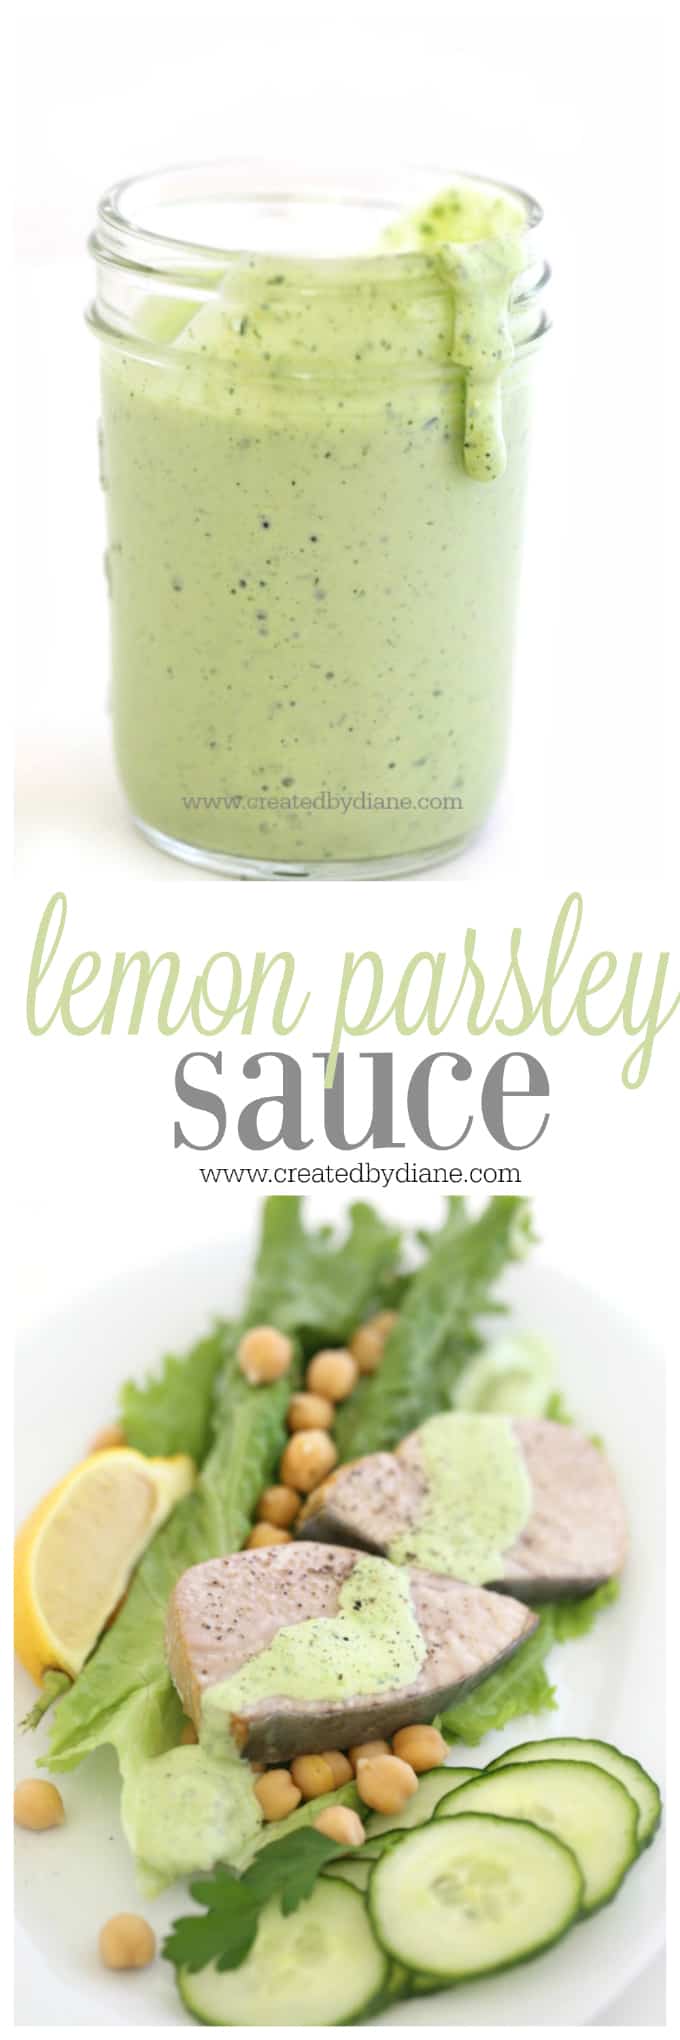 lemon parsley sauce great on chicken, fish, vegetables www.createdbydiane.com